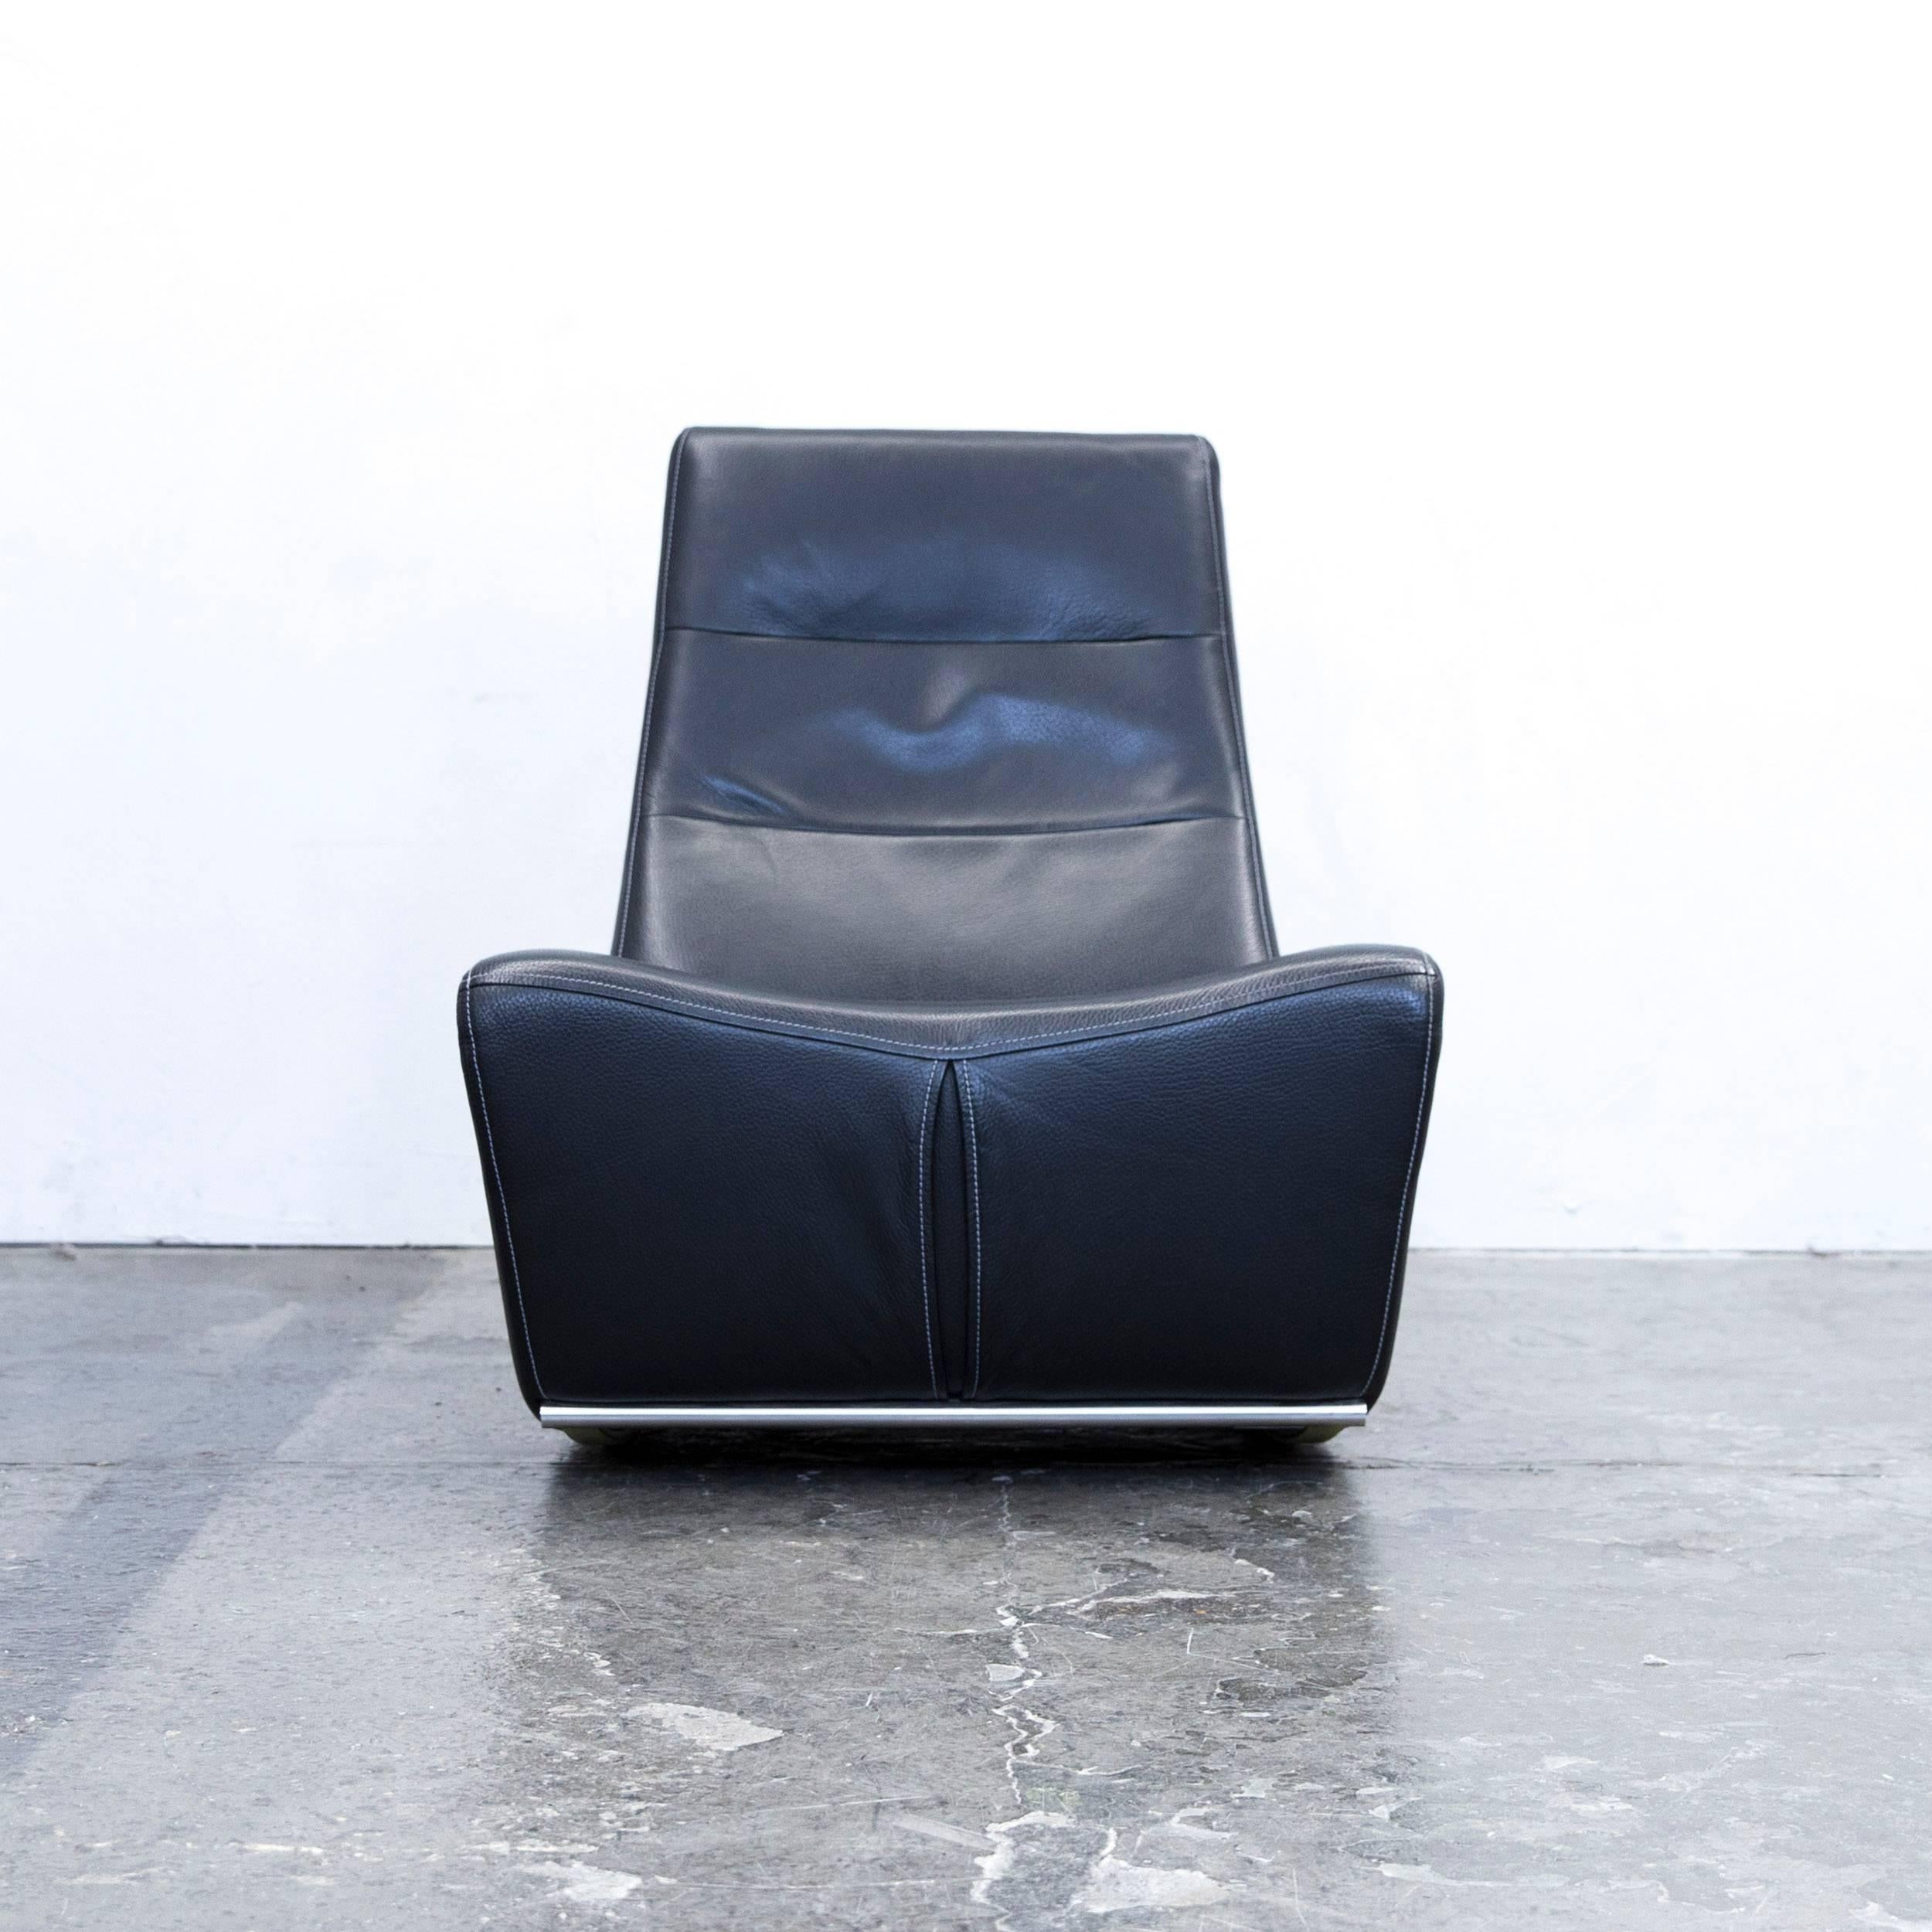 Black colored original Himolla Maximilian designer leather chair in a minimalistic and modern design, made for pure comfort.